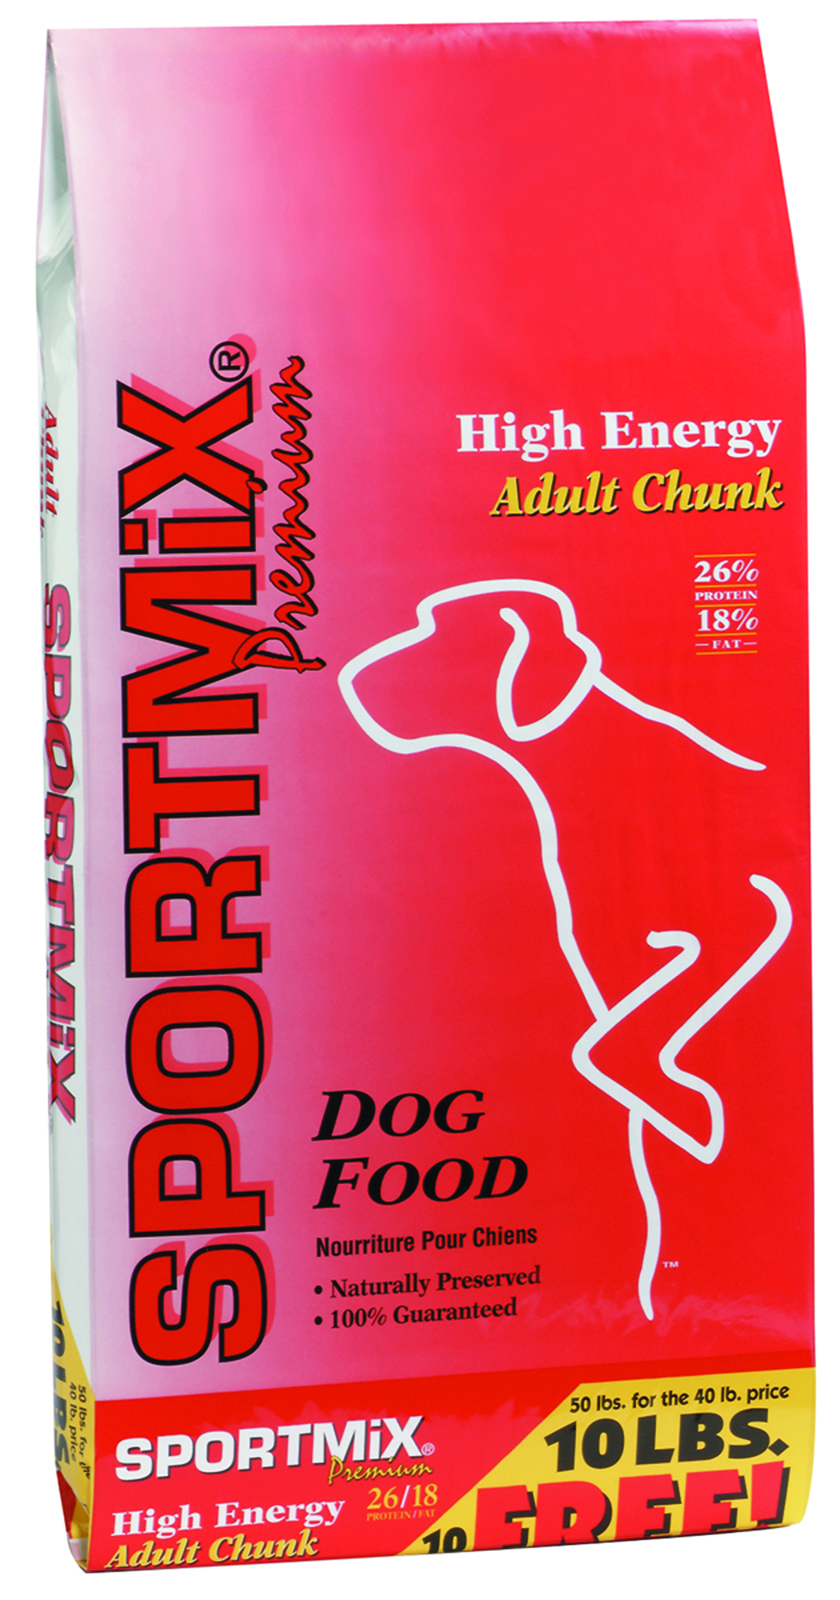 Sportmix High Energy Chicken Dog Food - 50lbs.